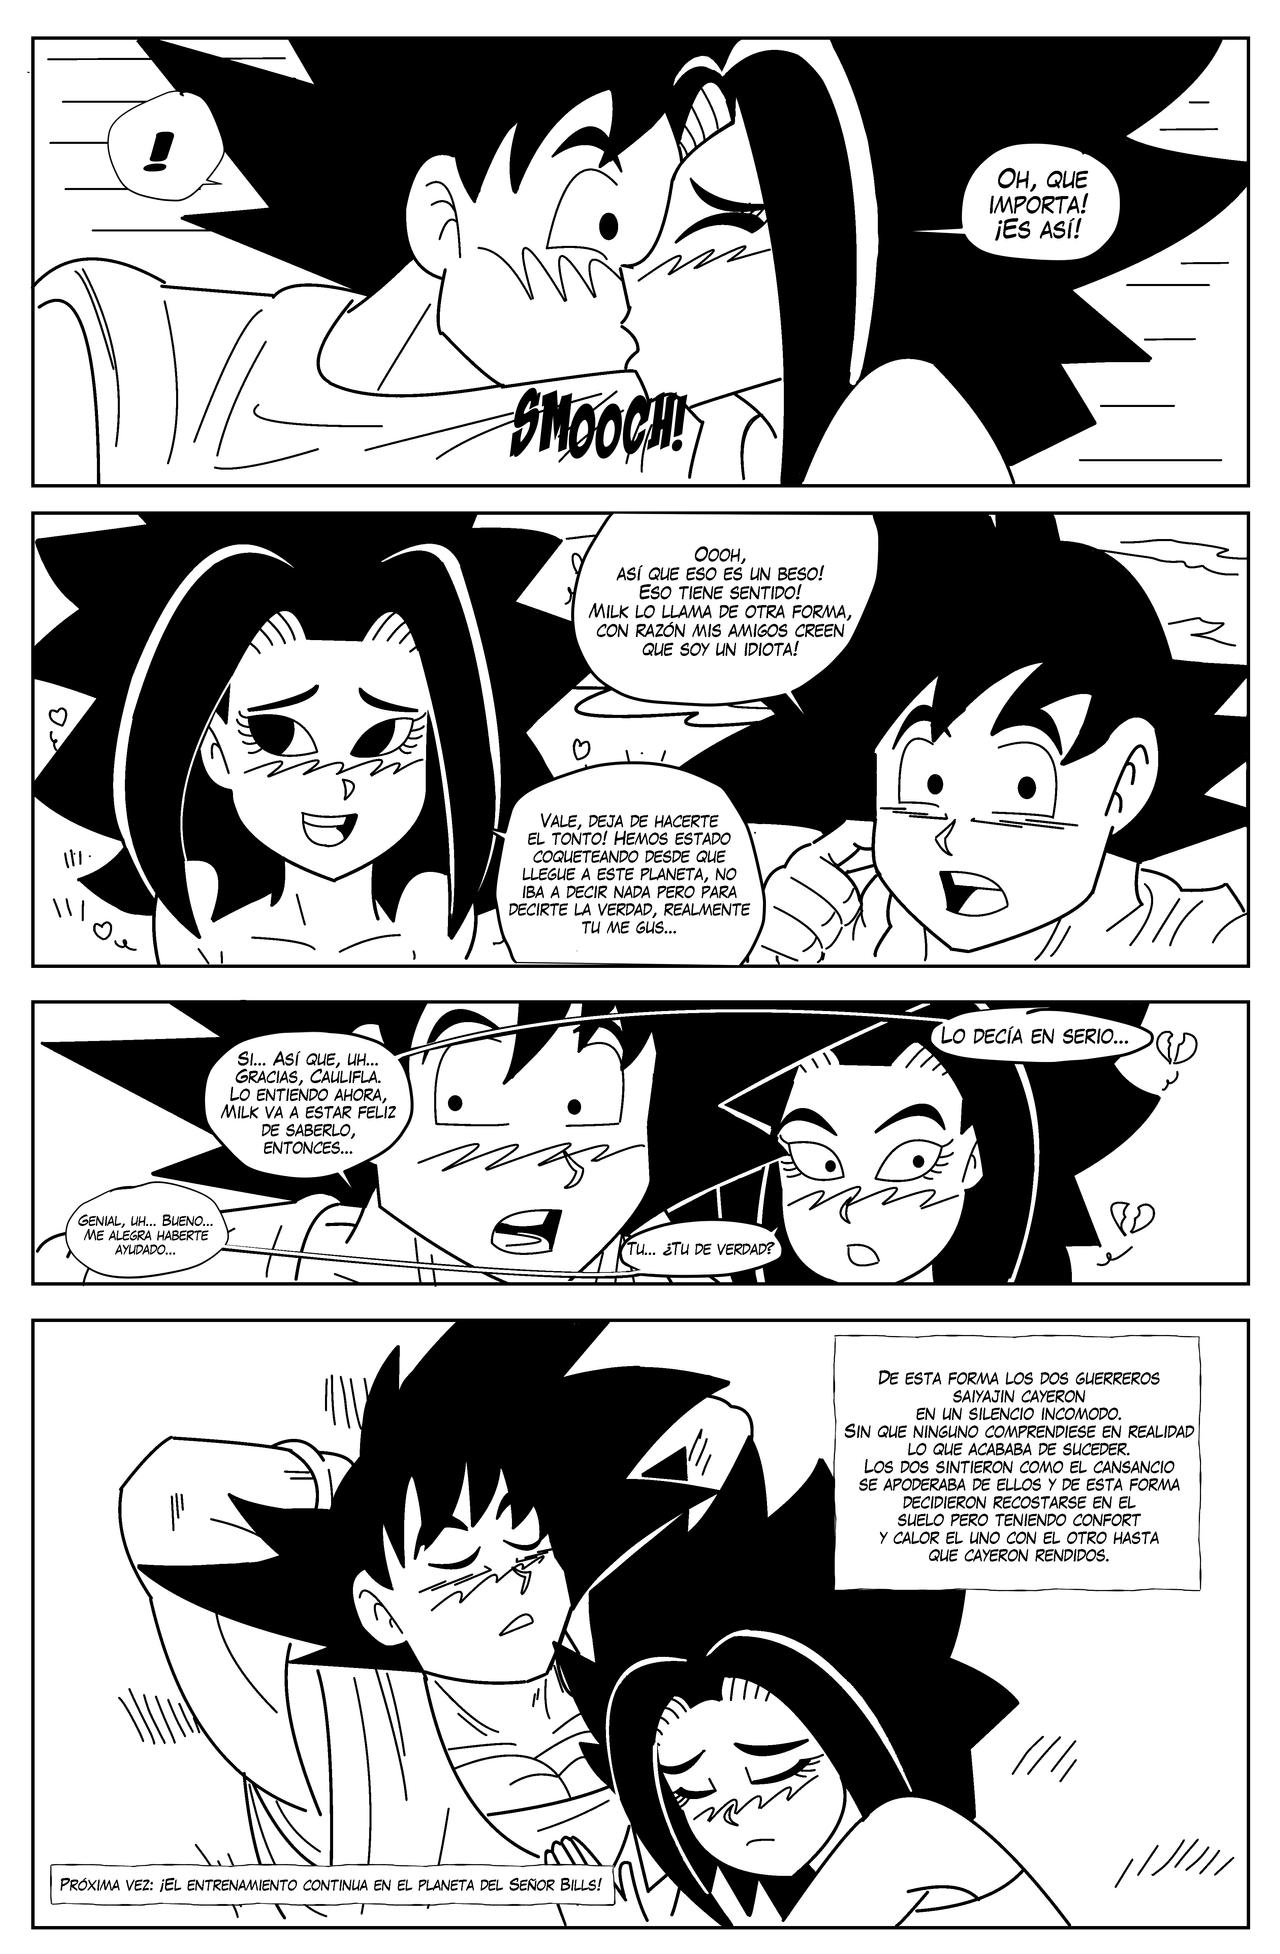 DragonBall:GTH(A Goku X Caulifla Story)ESPANOLP142 by chumpchangedraws on  DeviantArt